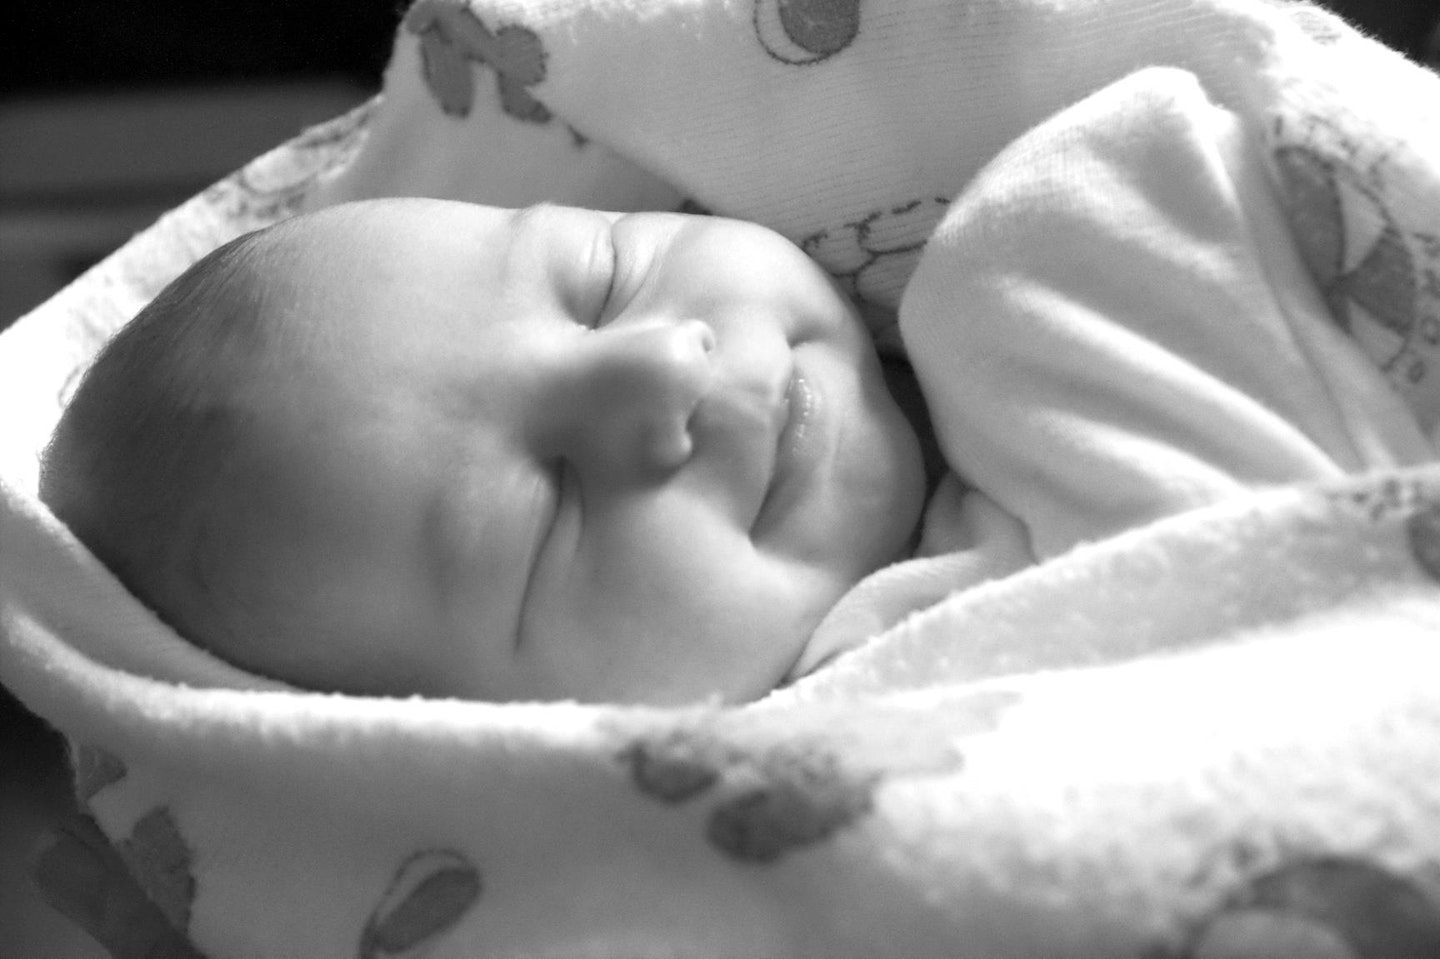 jillian-johnson-jarrod-baby-landon-breastfeeding-killed-child